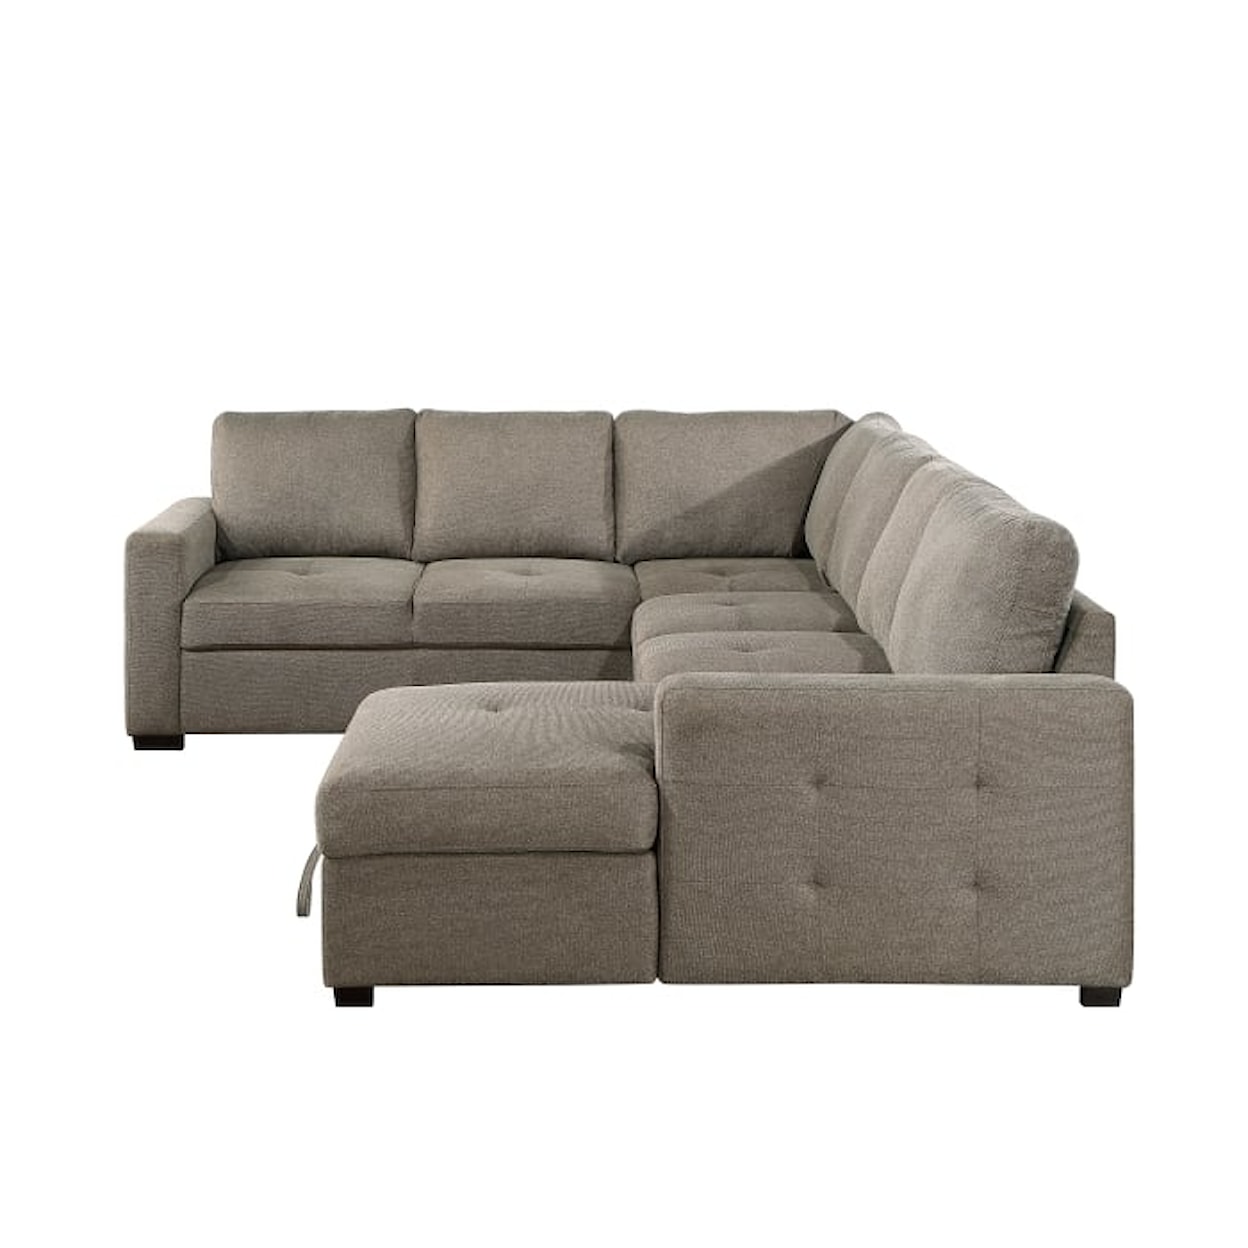 Homelegance Elton 3-Piece Sectional Sofa